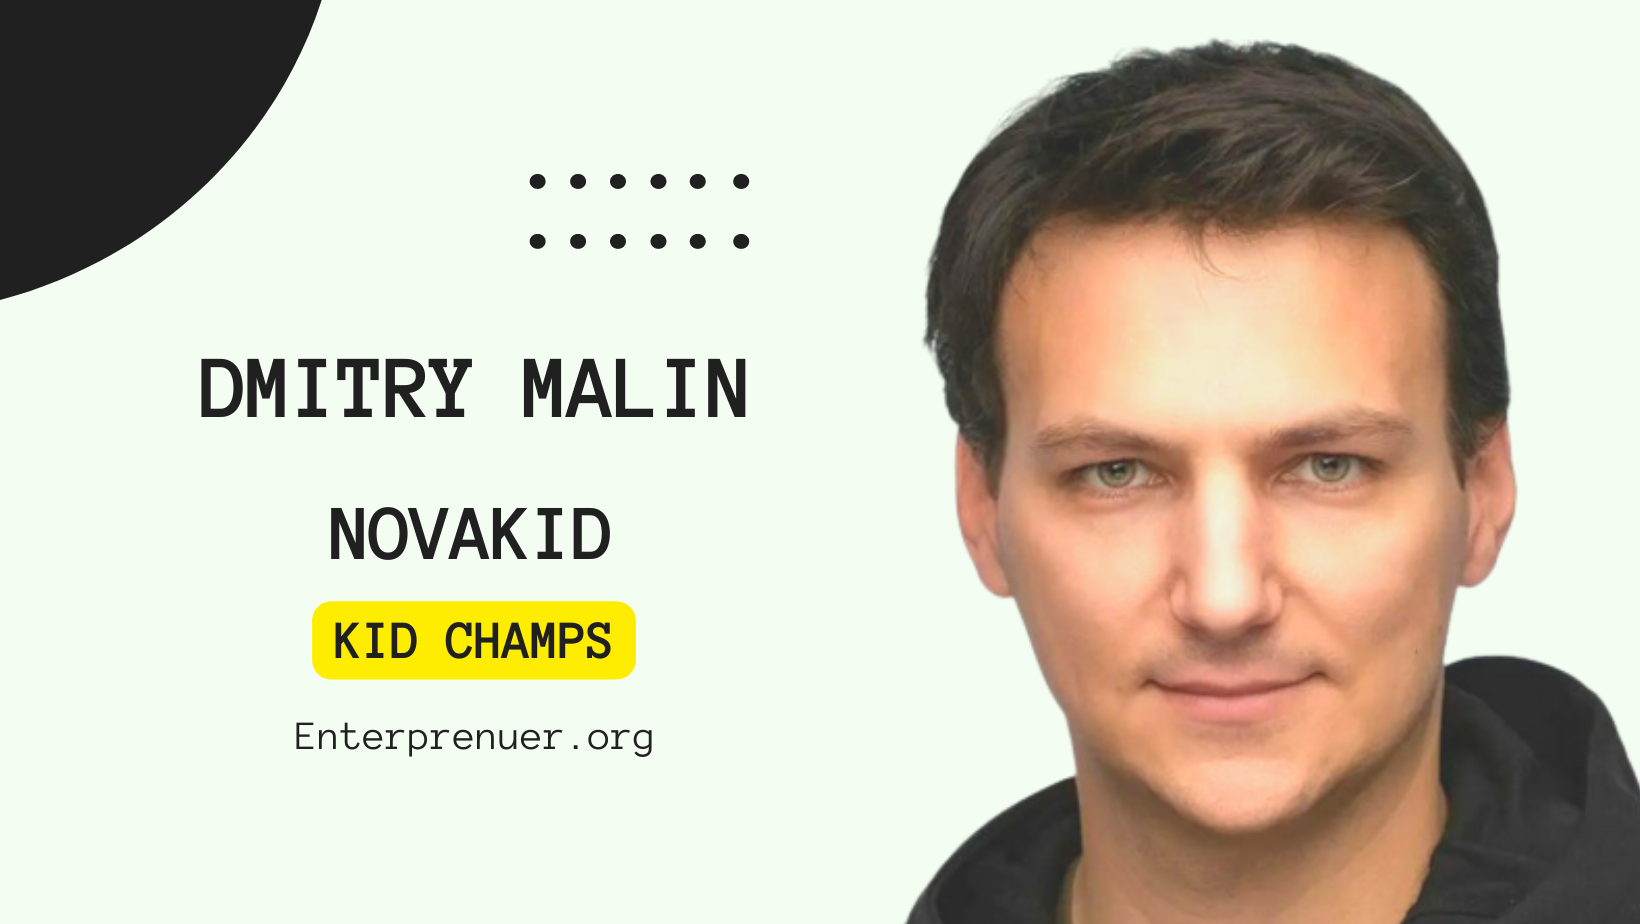 Meet the Kid Champs Dmitry Malin of Novakid.